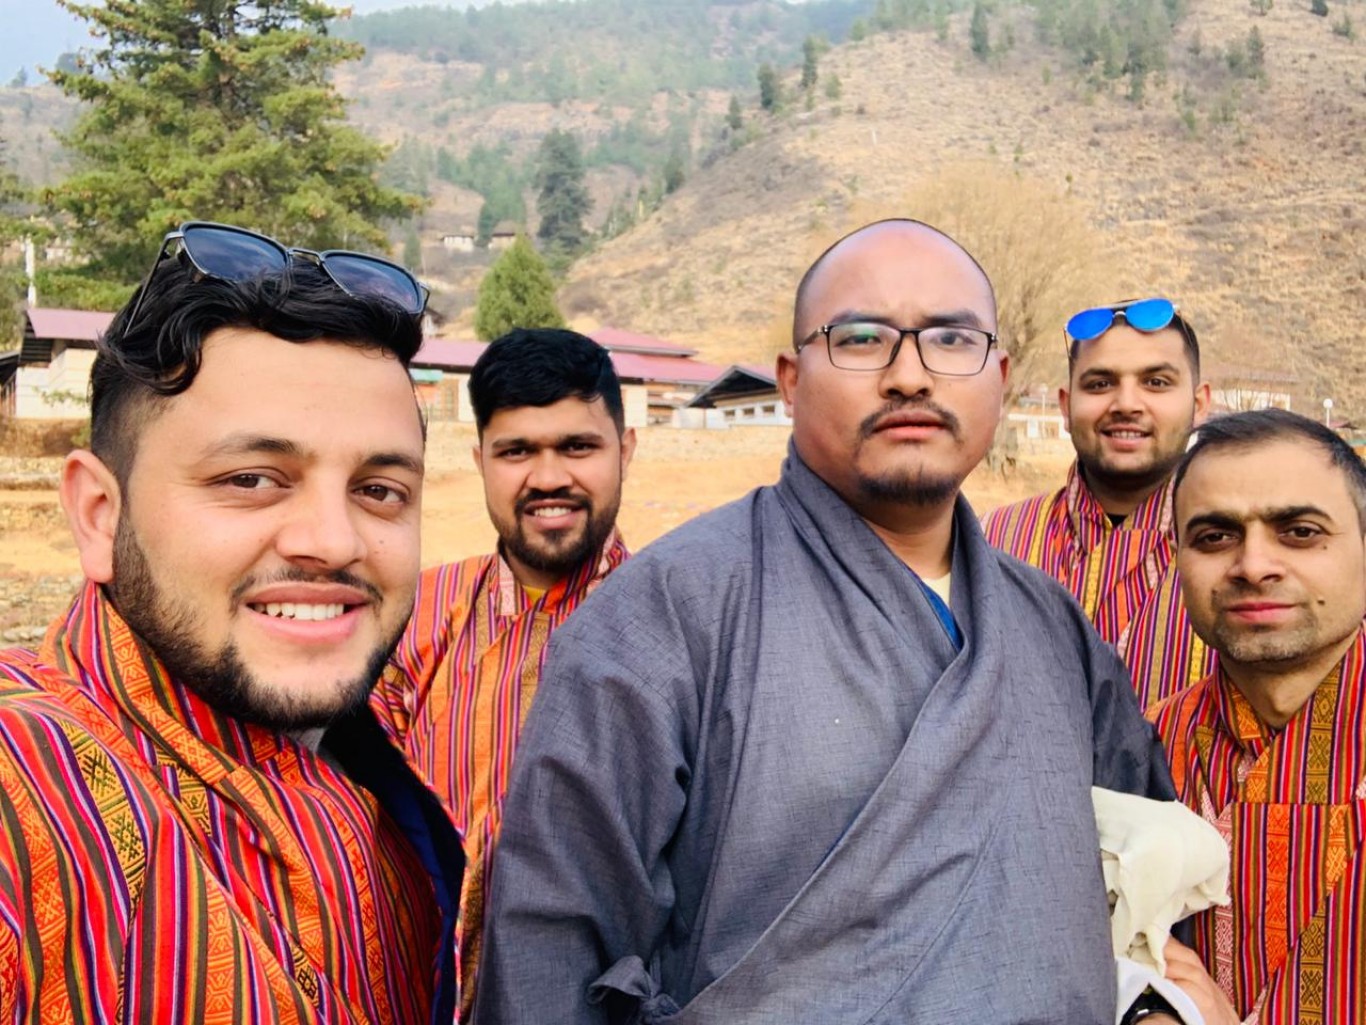 Bhutan Cultural tour